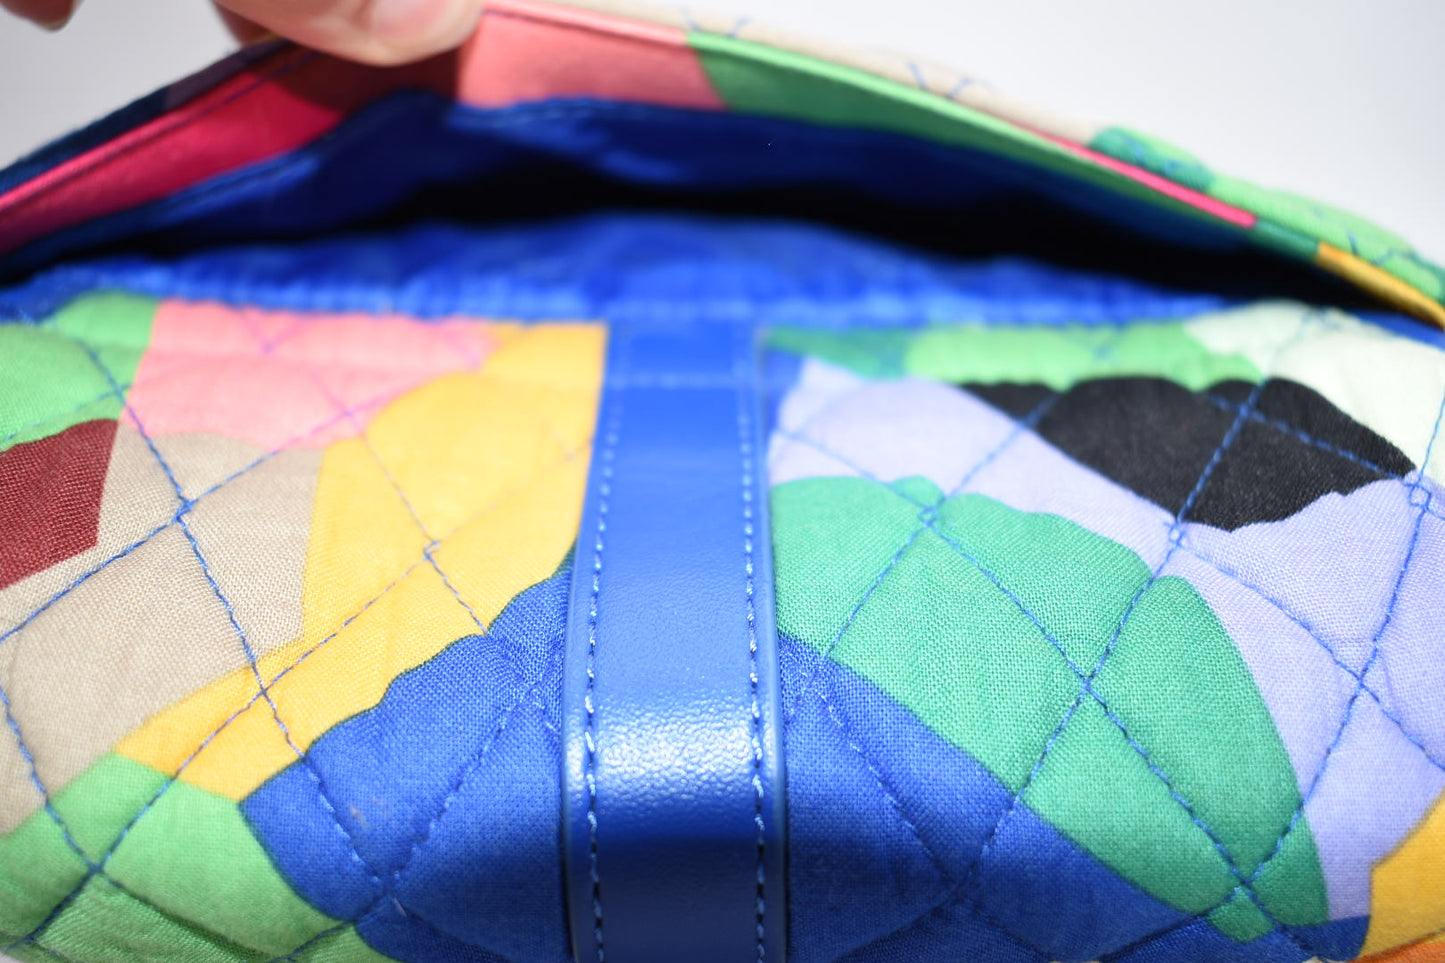 Vera Bradley Slim Saddle Bag in "Pop Art" Pattern